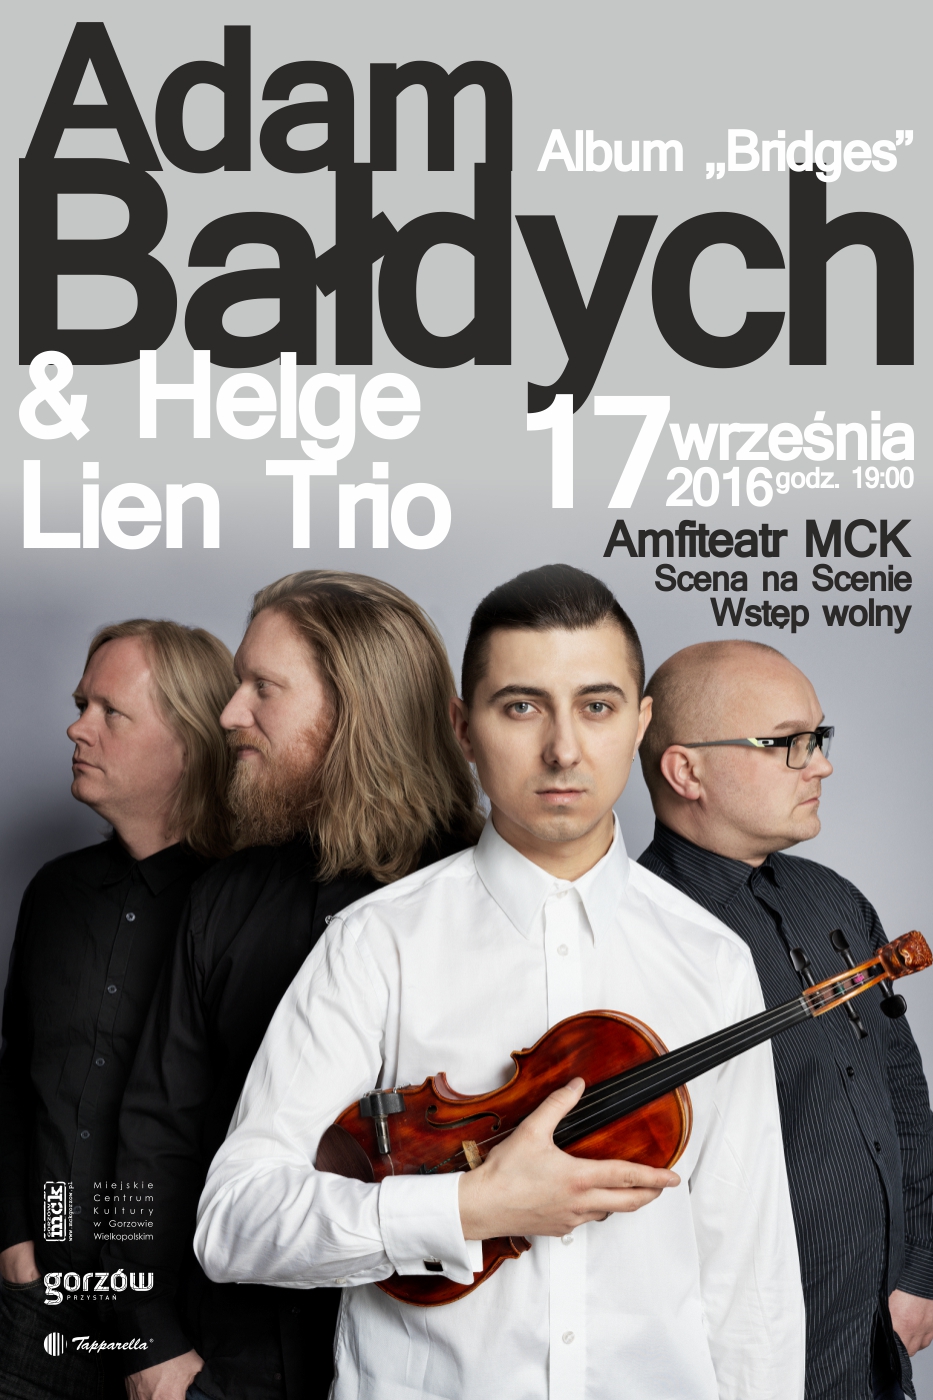 Adam Bałdych & Helge Lien Trio "Bridges"